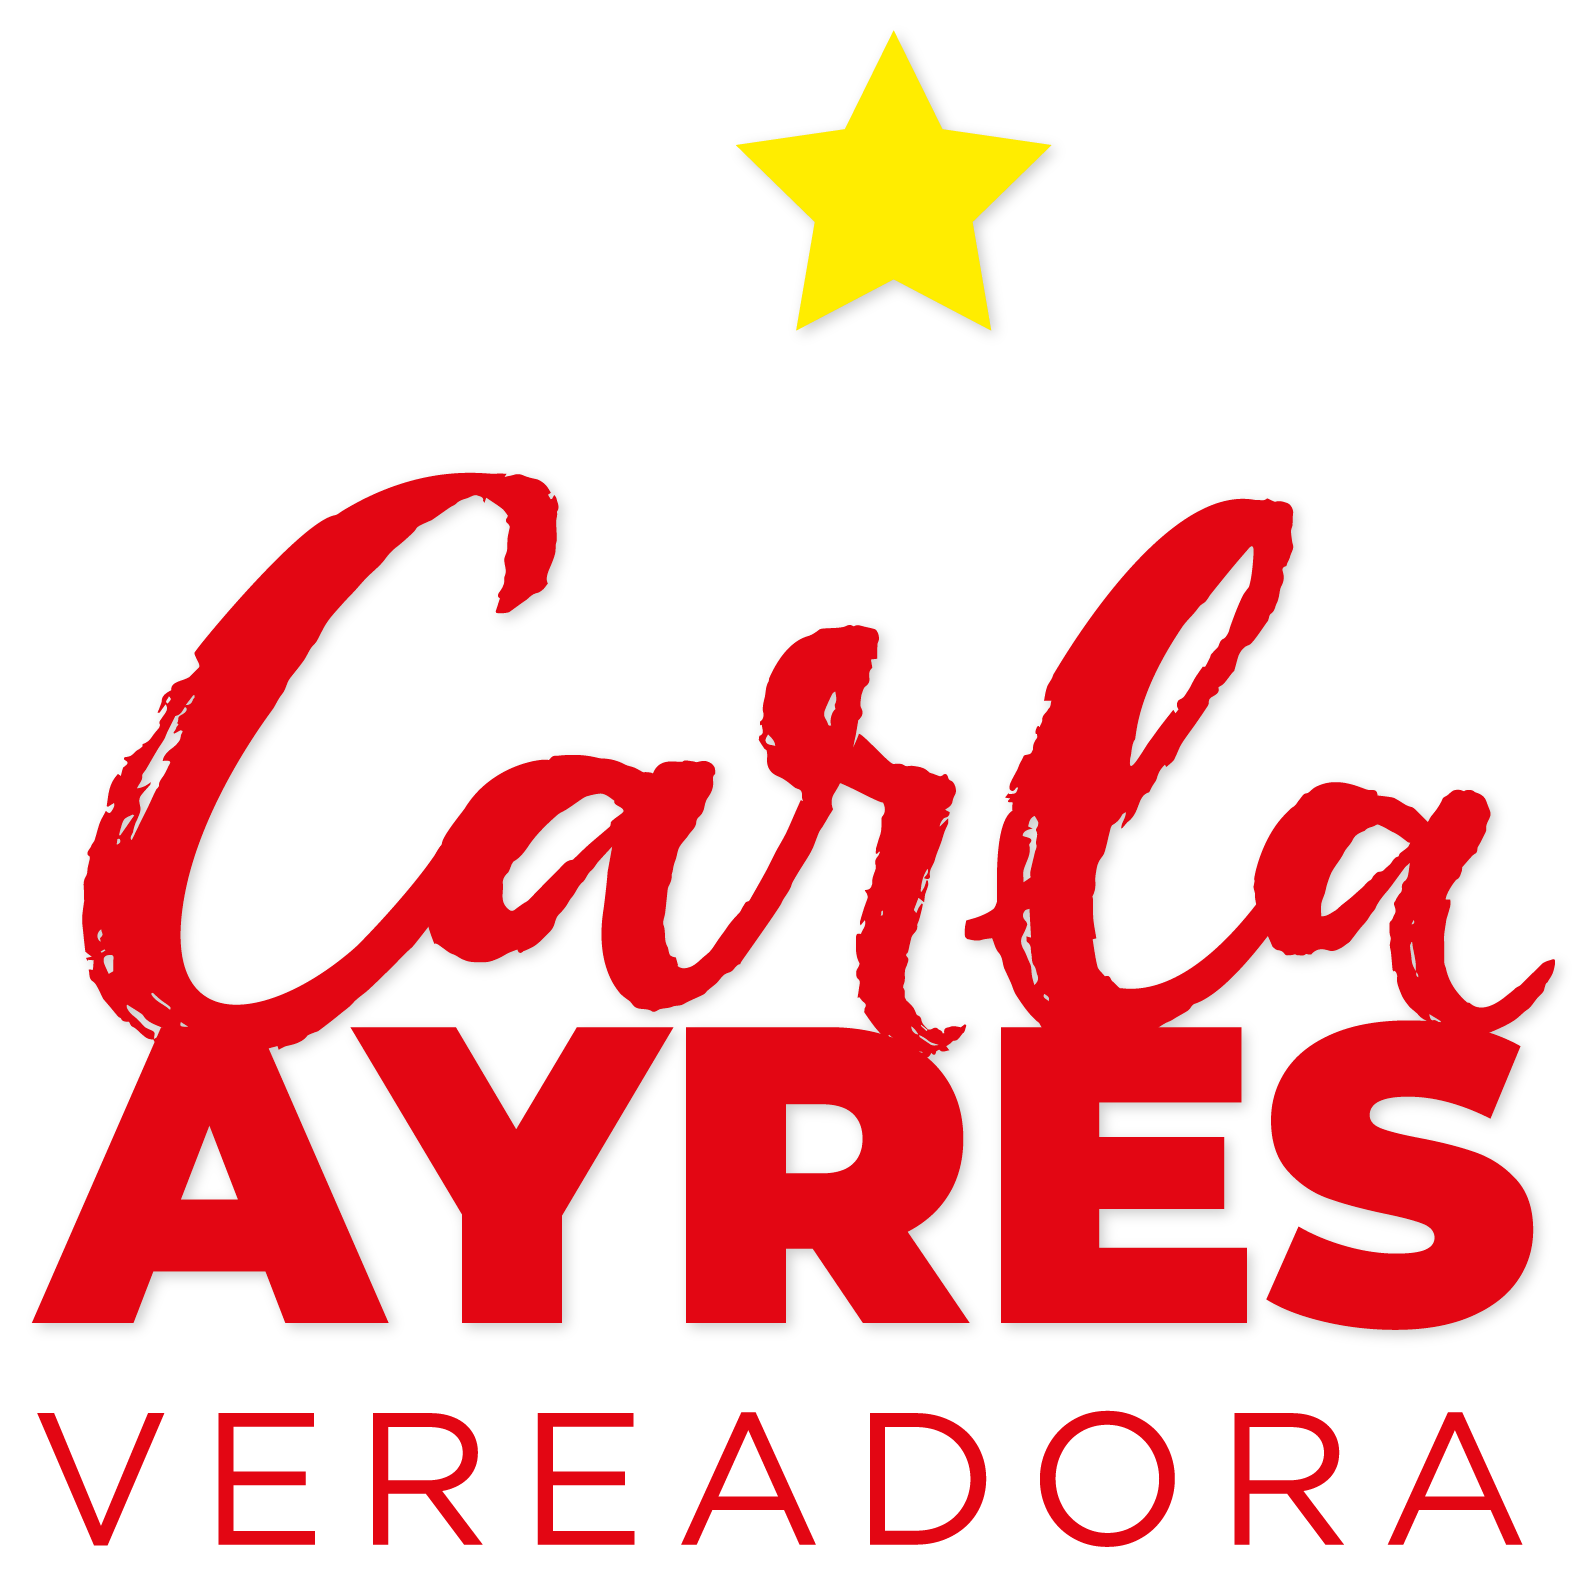 Carla Ayres Vereadora